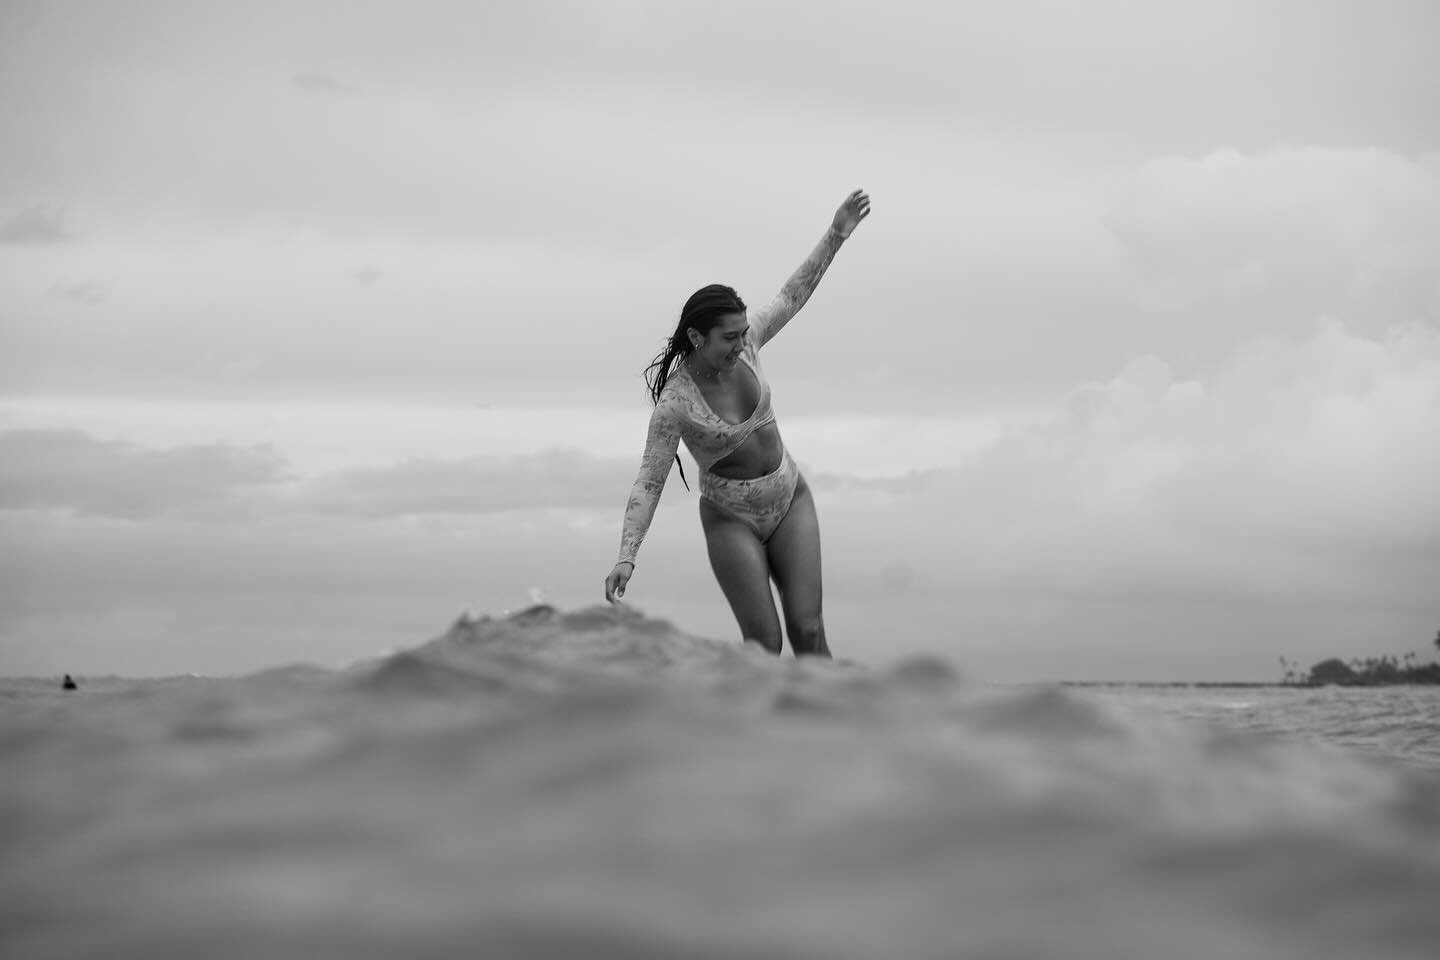 Feminine angles
.
.
.
#surfer #surfergirl #surfing #longboarding #theboardroom #theboardroomwomen #surf #hawaii #waikiki #angles #femalegaze #femalesurfphotographer #femalesurfphotography